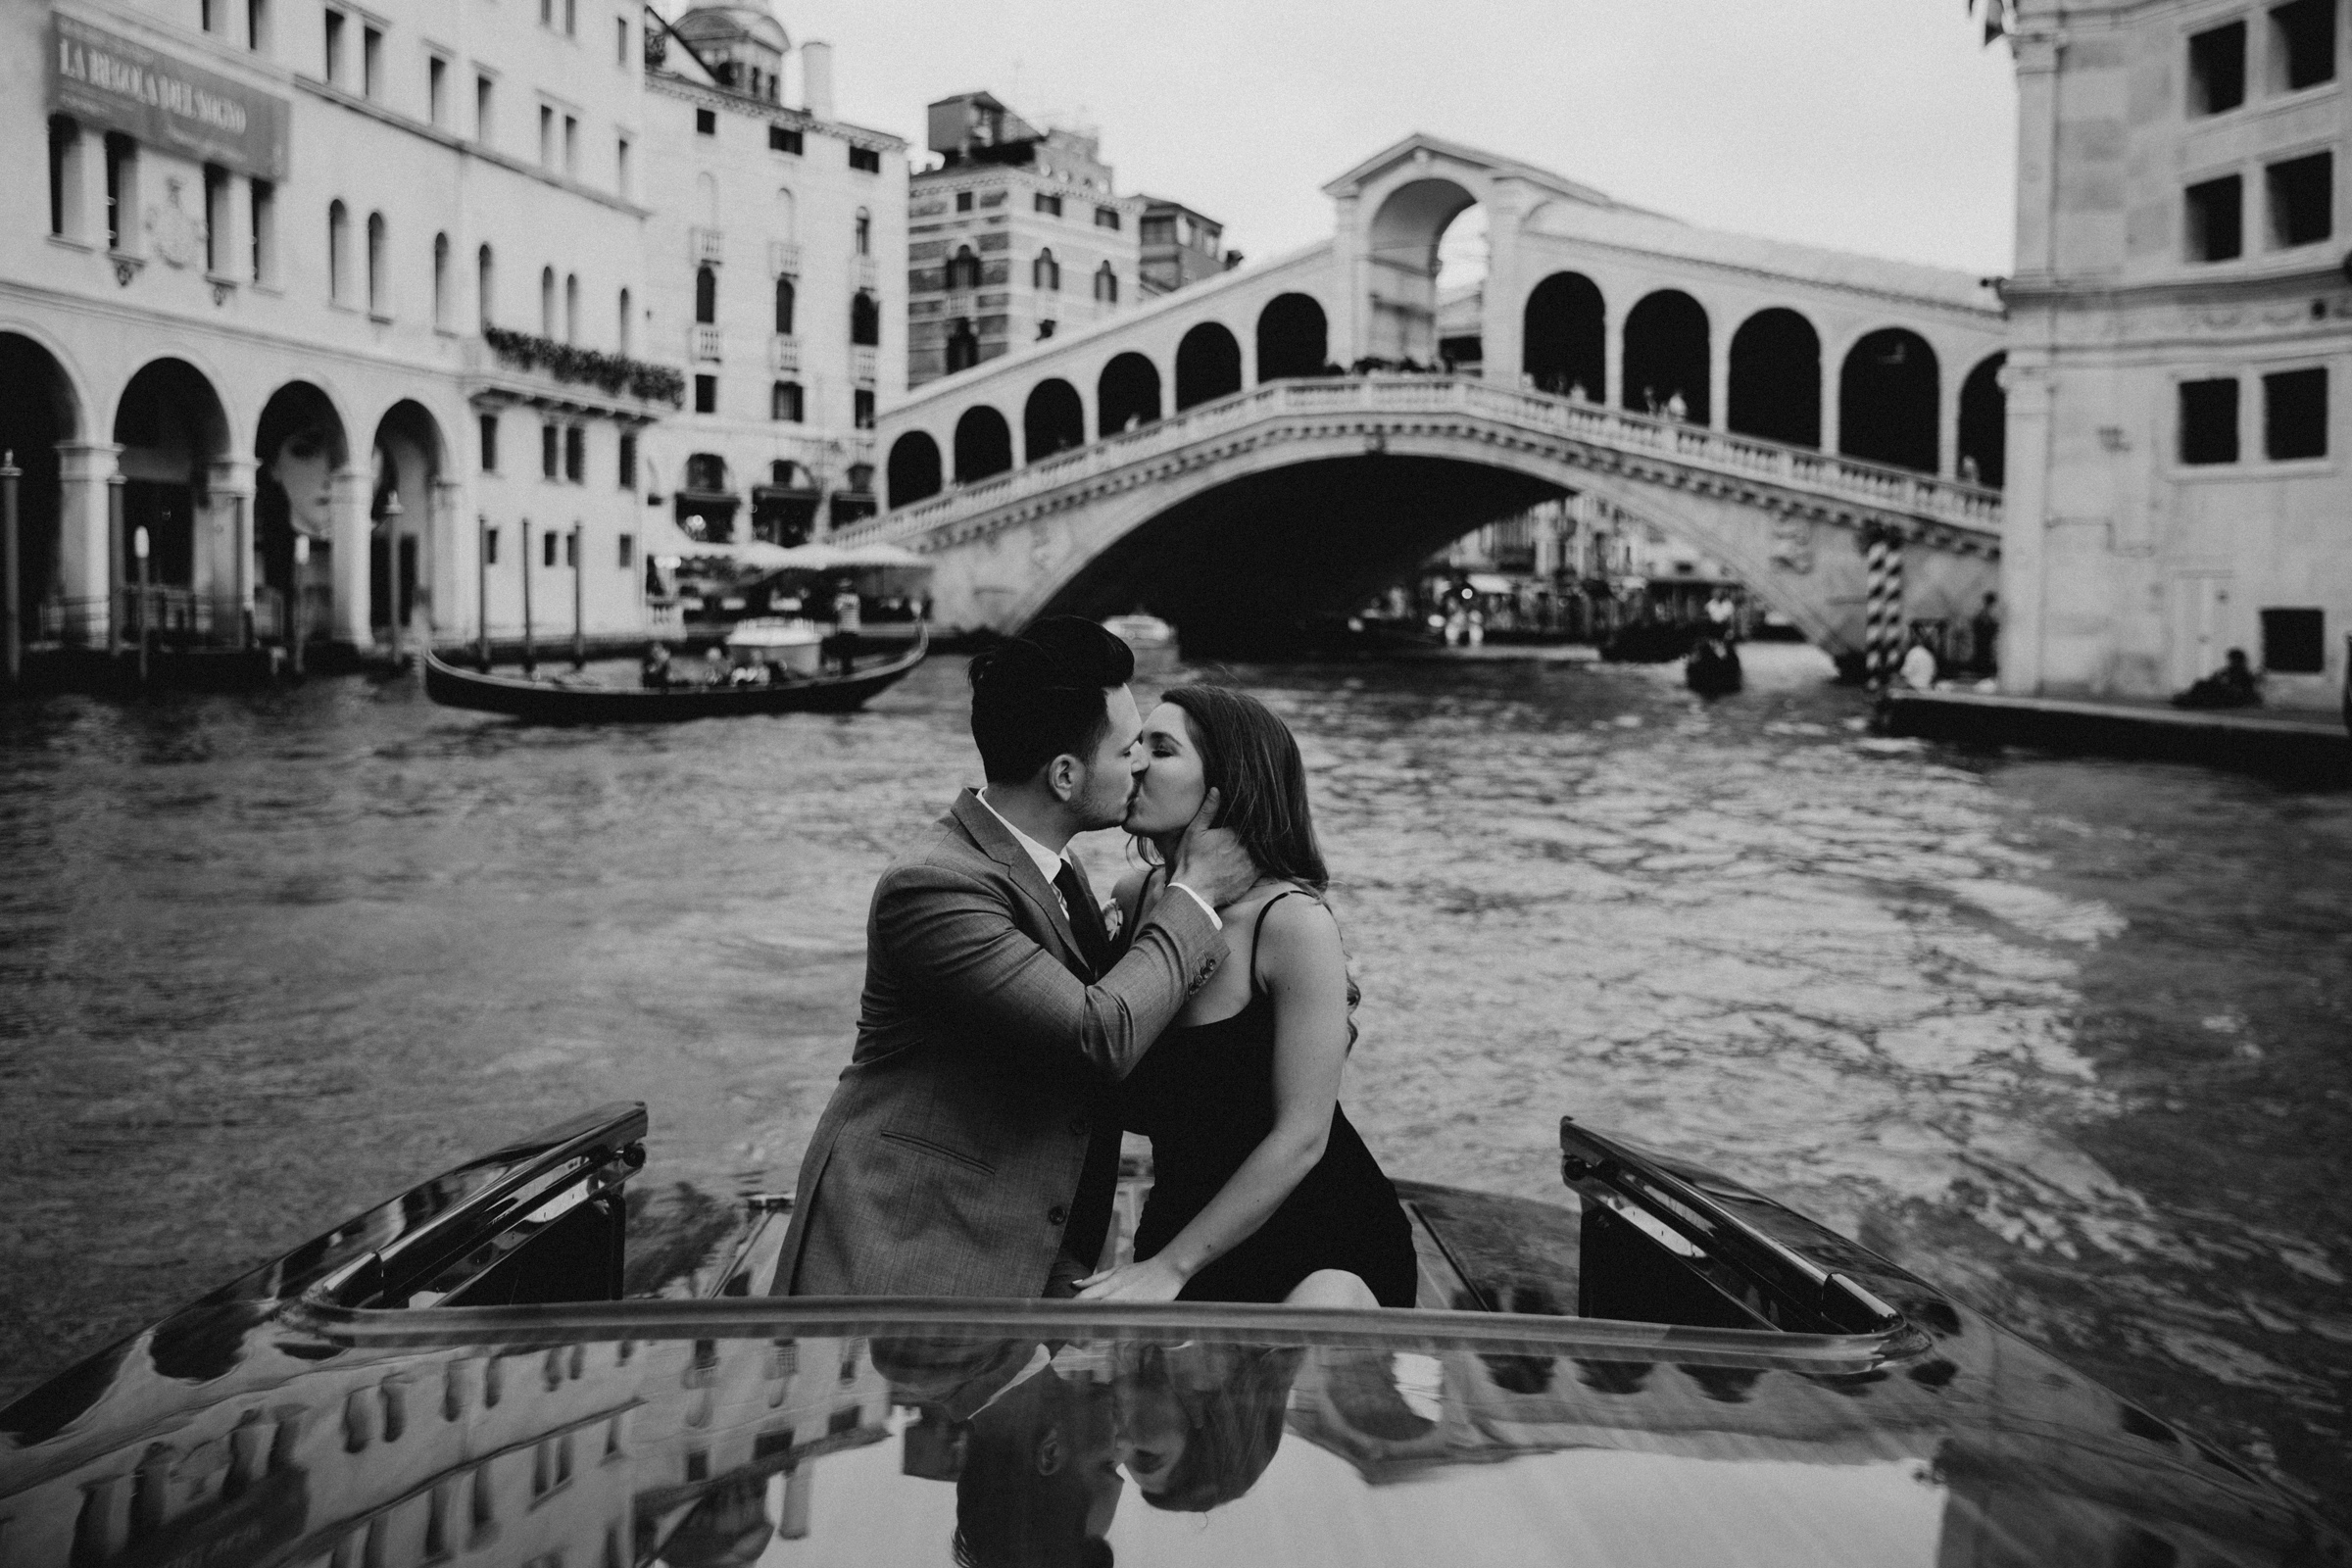 Venice engagement photographer - rialto bridge surprise proposal luxury wooden water taxi clooney style